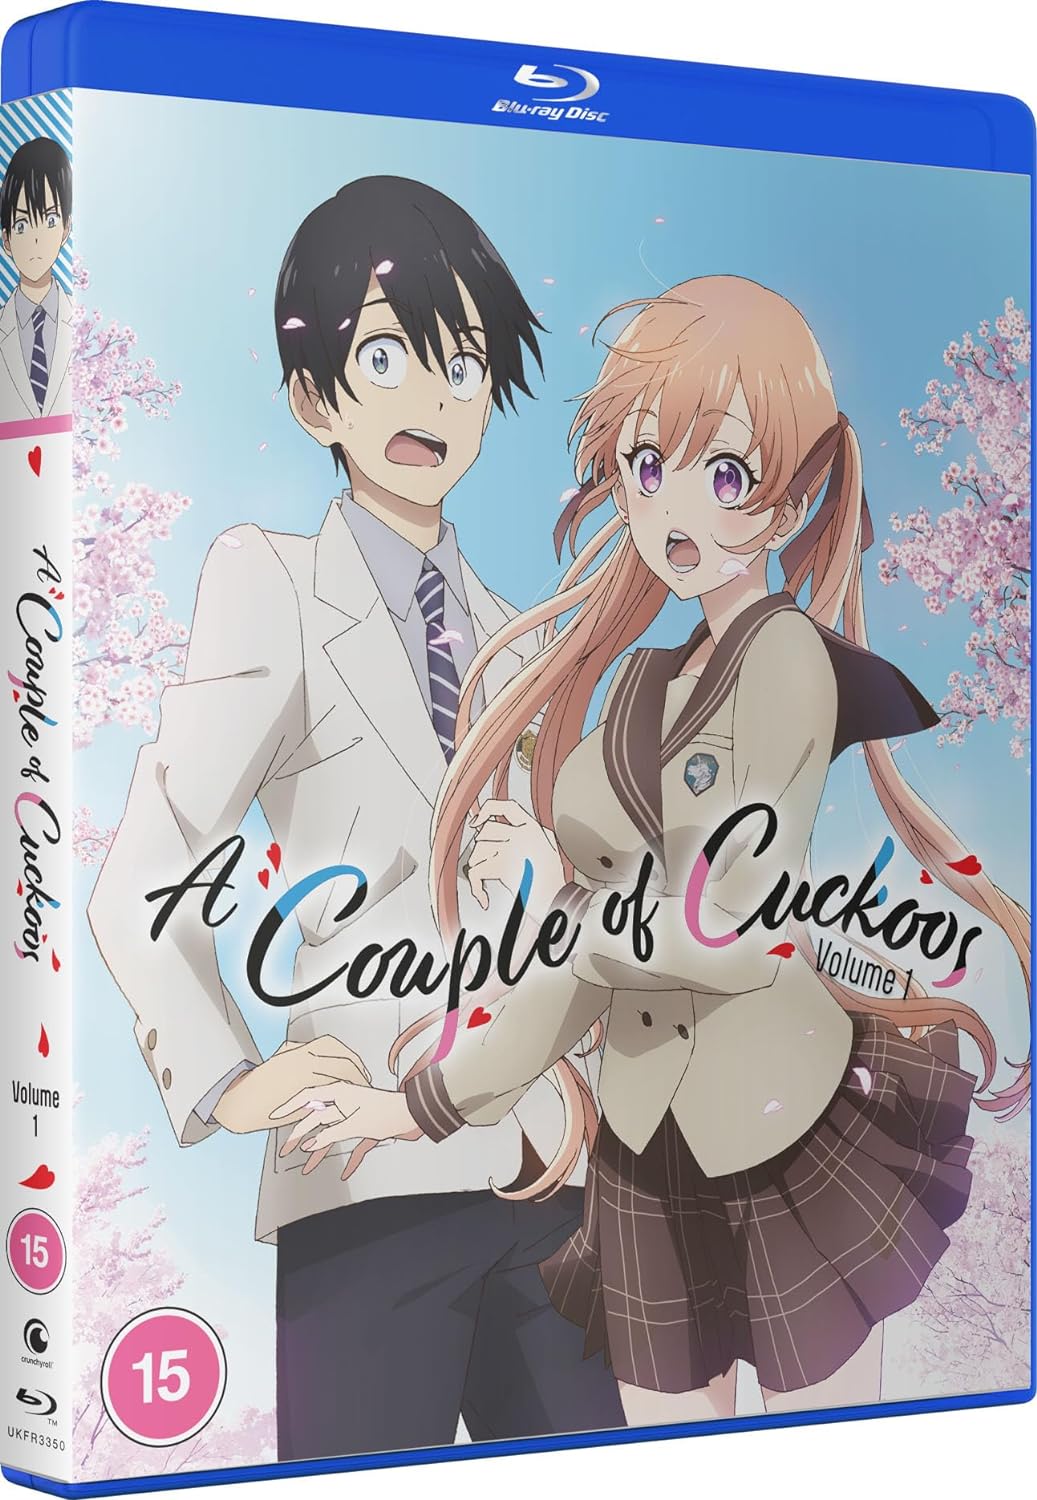 Classroom of the Elite Vol.2 Blu-ray Japan Version